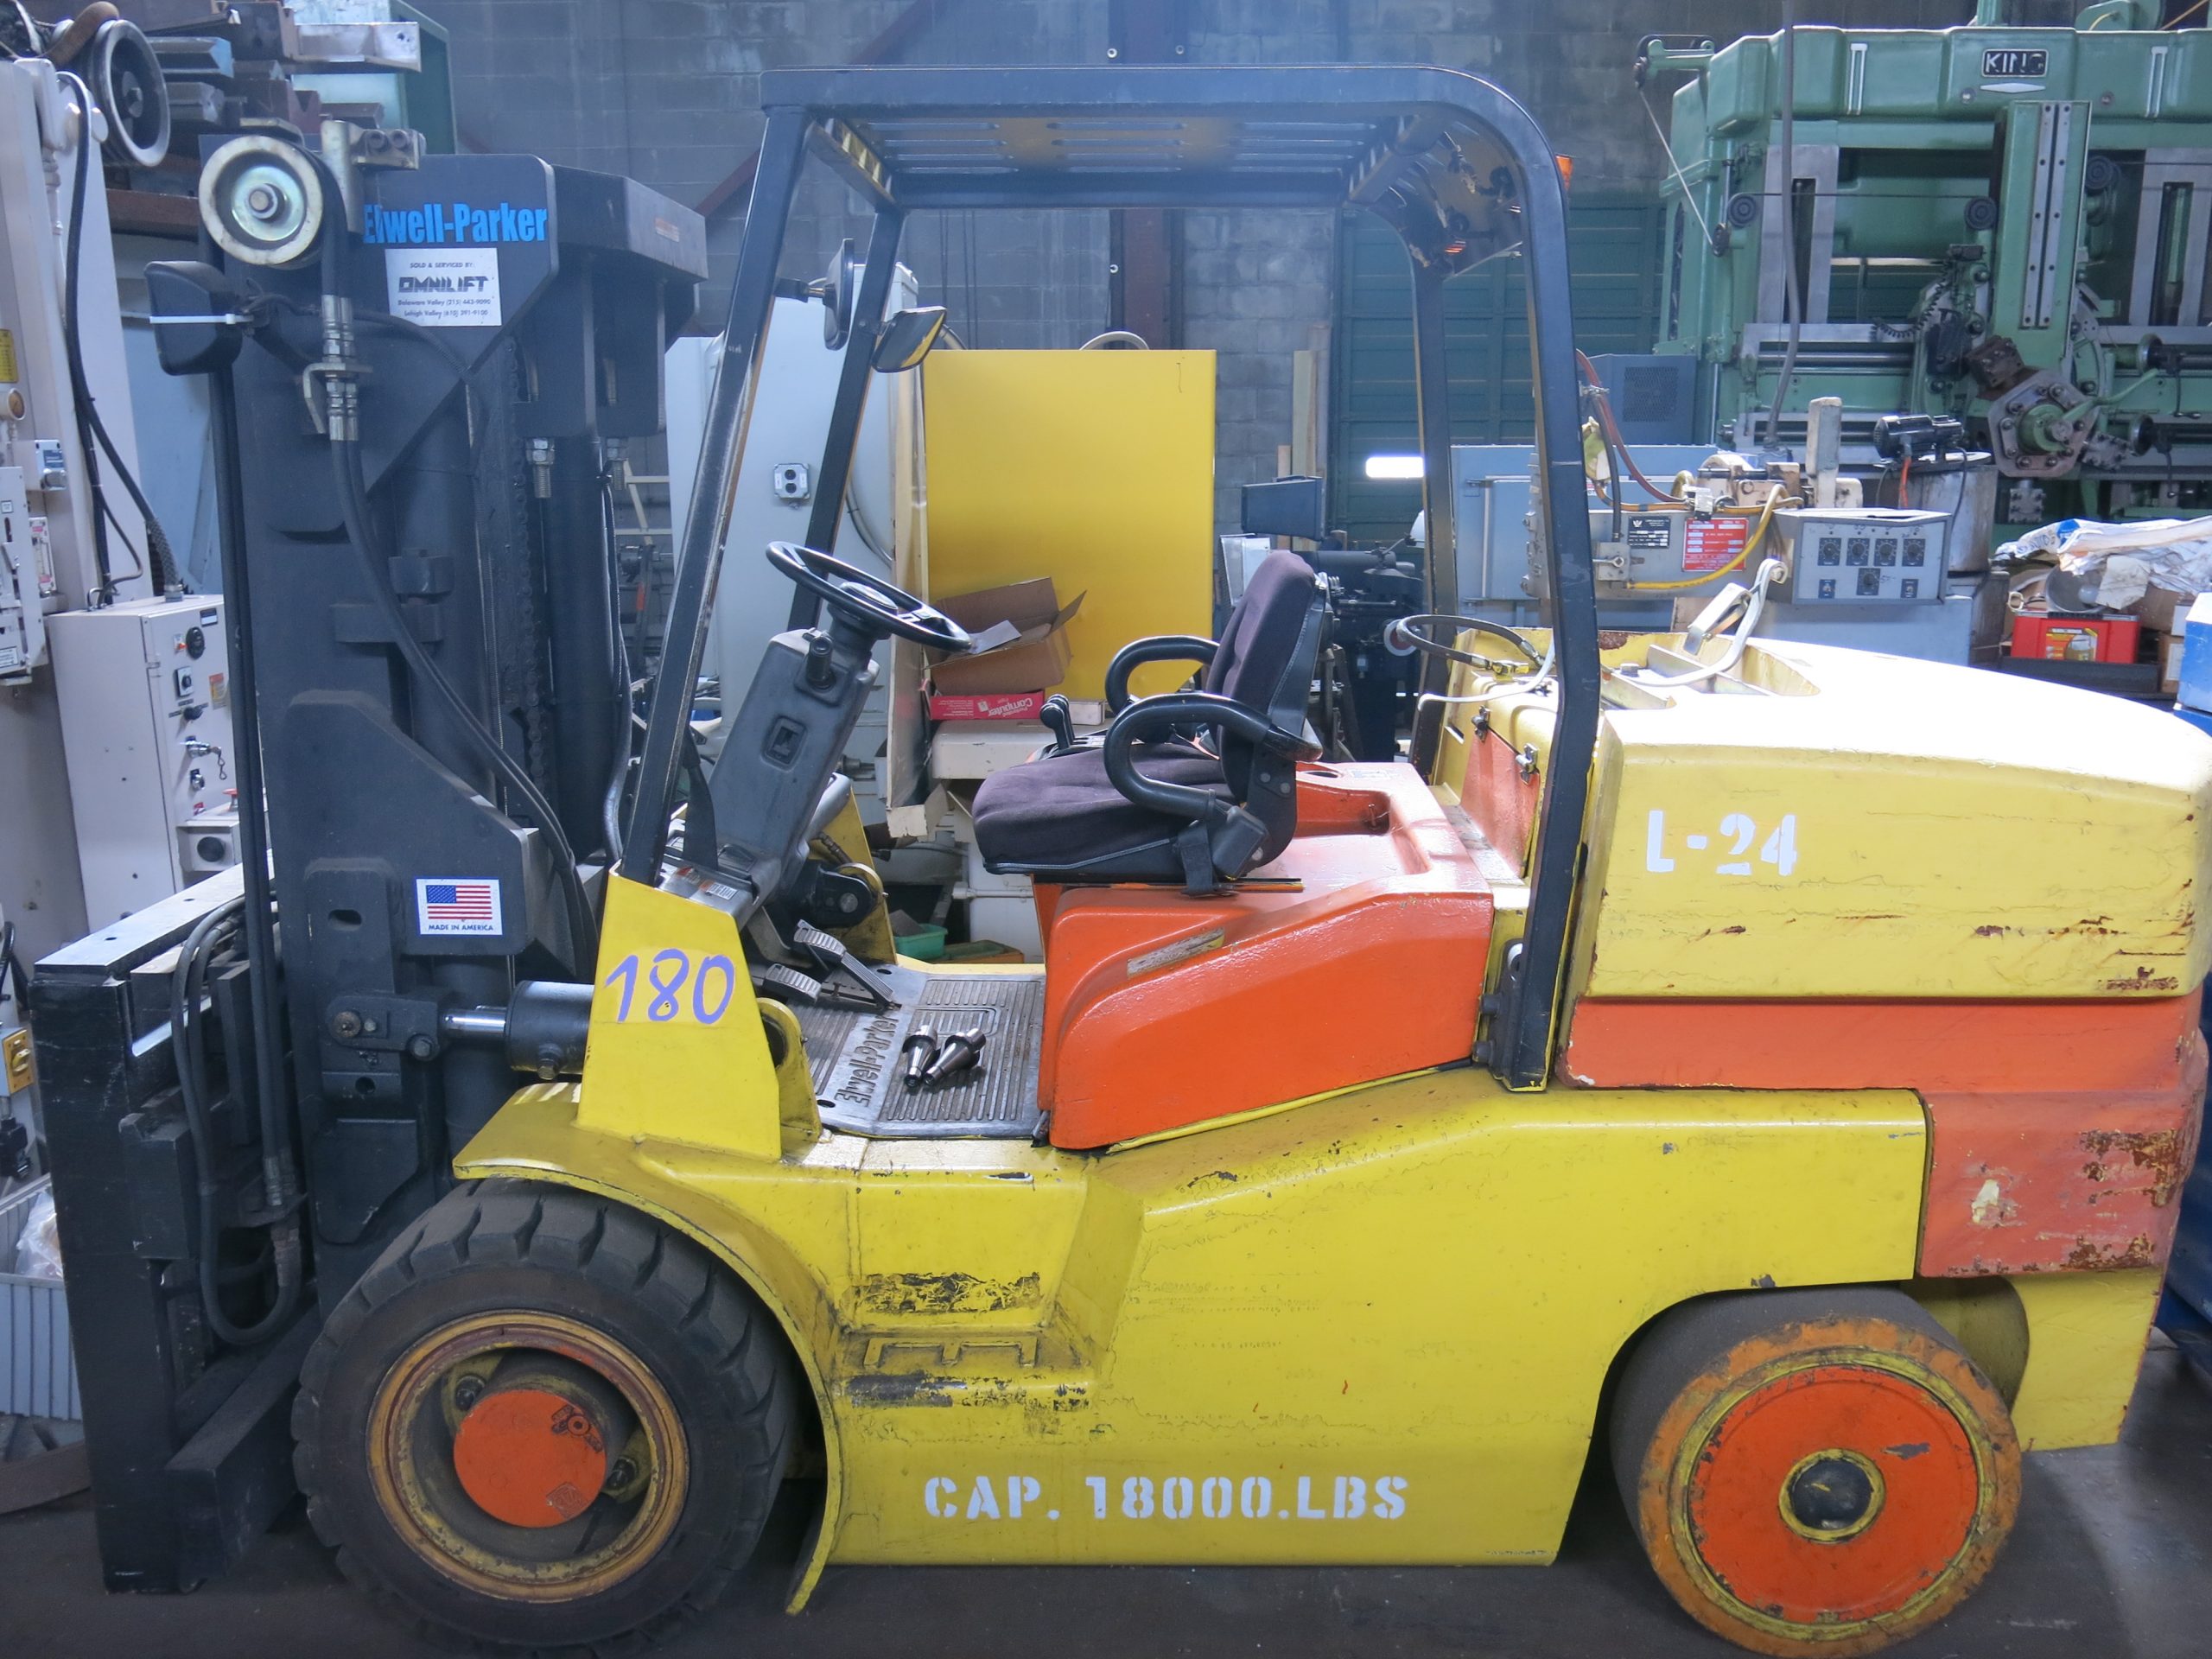 Elwell Parker 18,000 lb LP Forklift for Riggers and Coil Handling